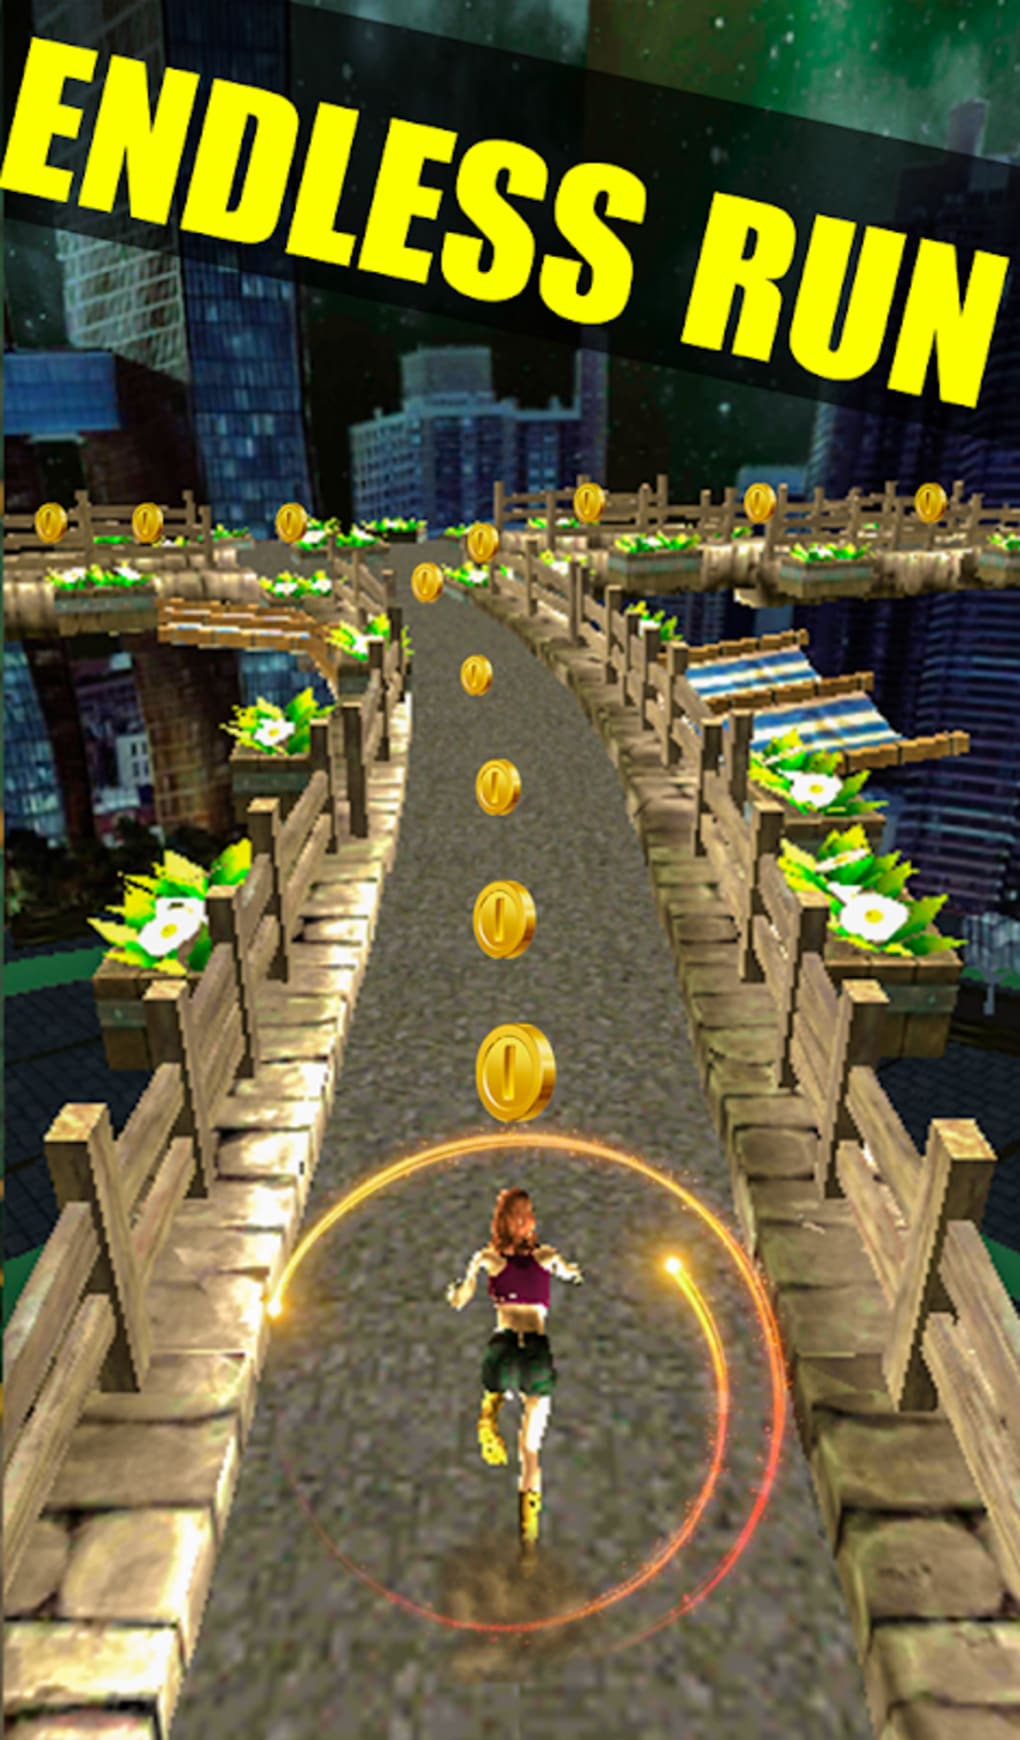 Tomb Runner Raider - Princess Girl Run Temple Apk Download for Android-  Latest version 1.0- com.temple.run.raiderrush